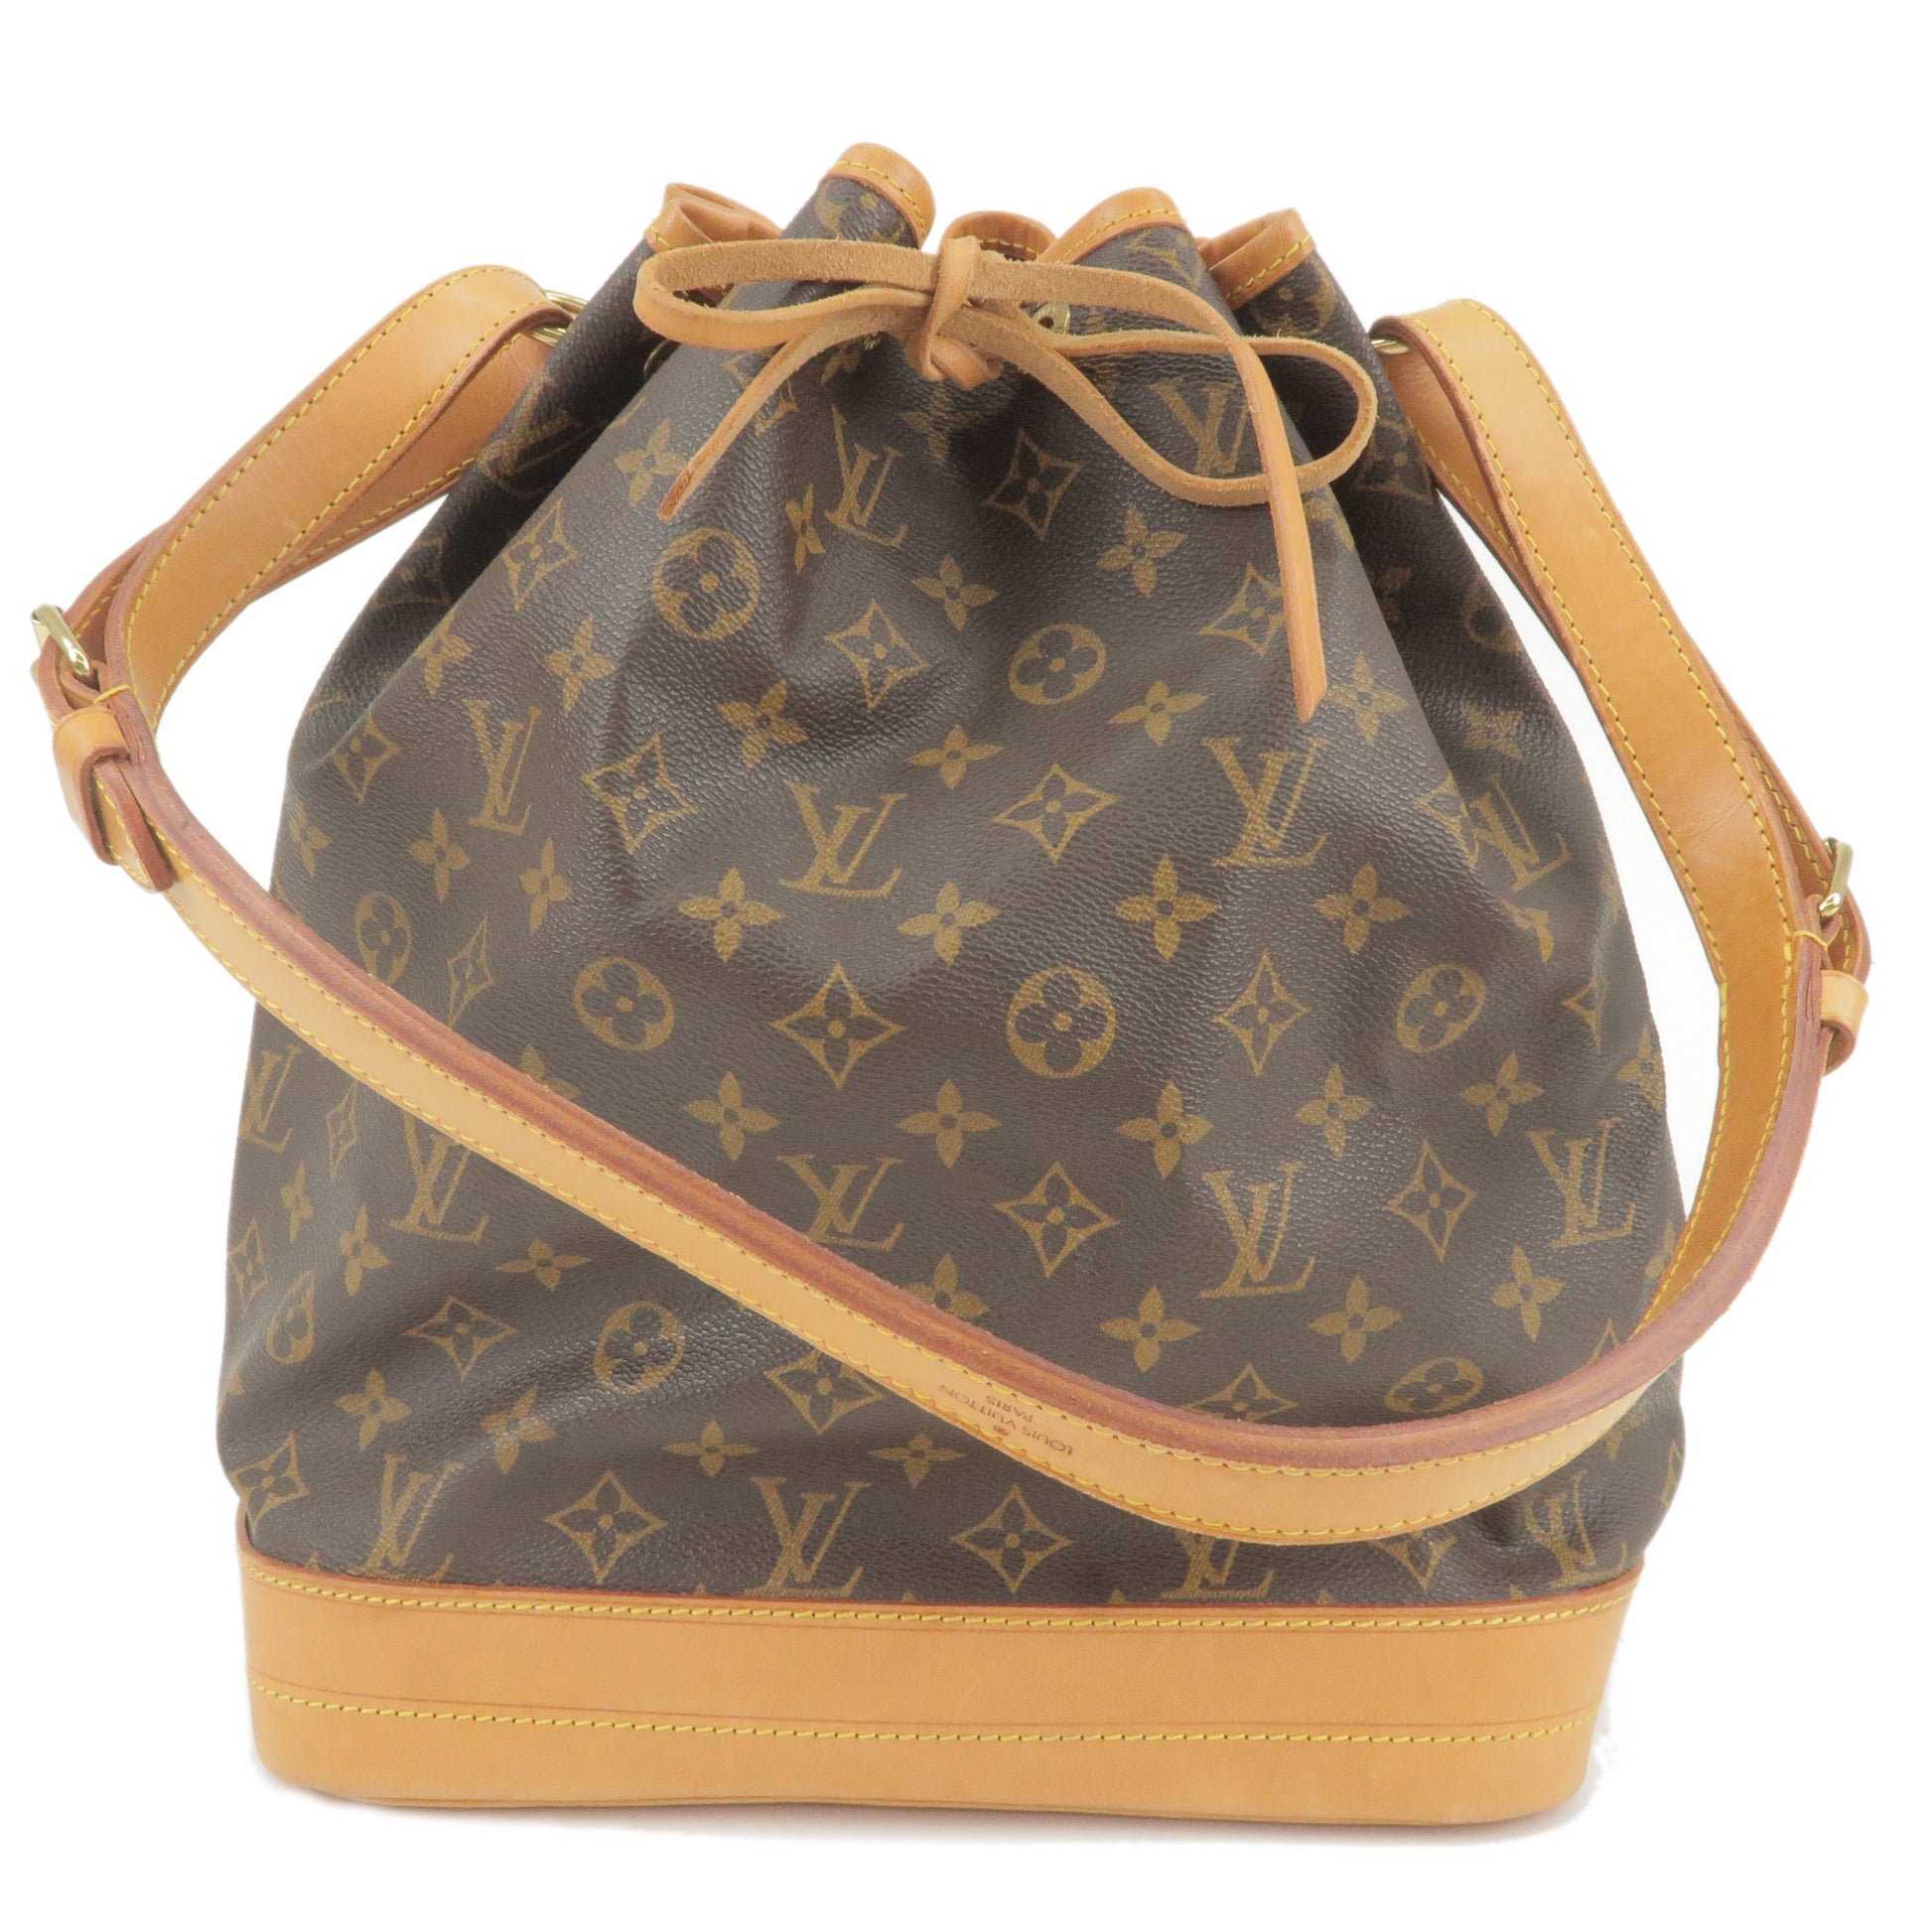 Louis-Vuitton-Monogram-Noe-Shoulder-Bag-Hand-Bag-M42224